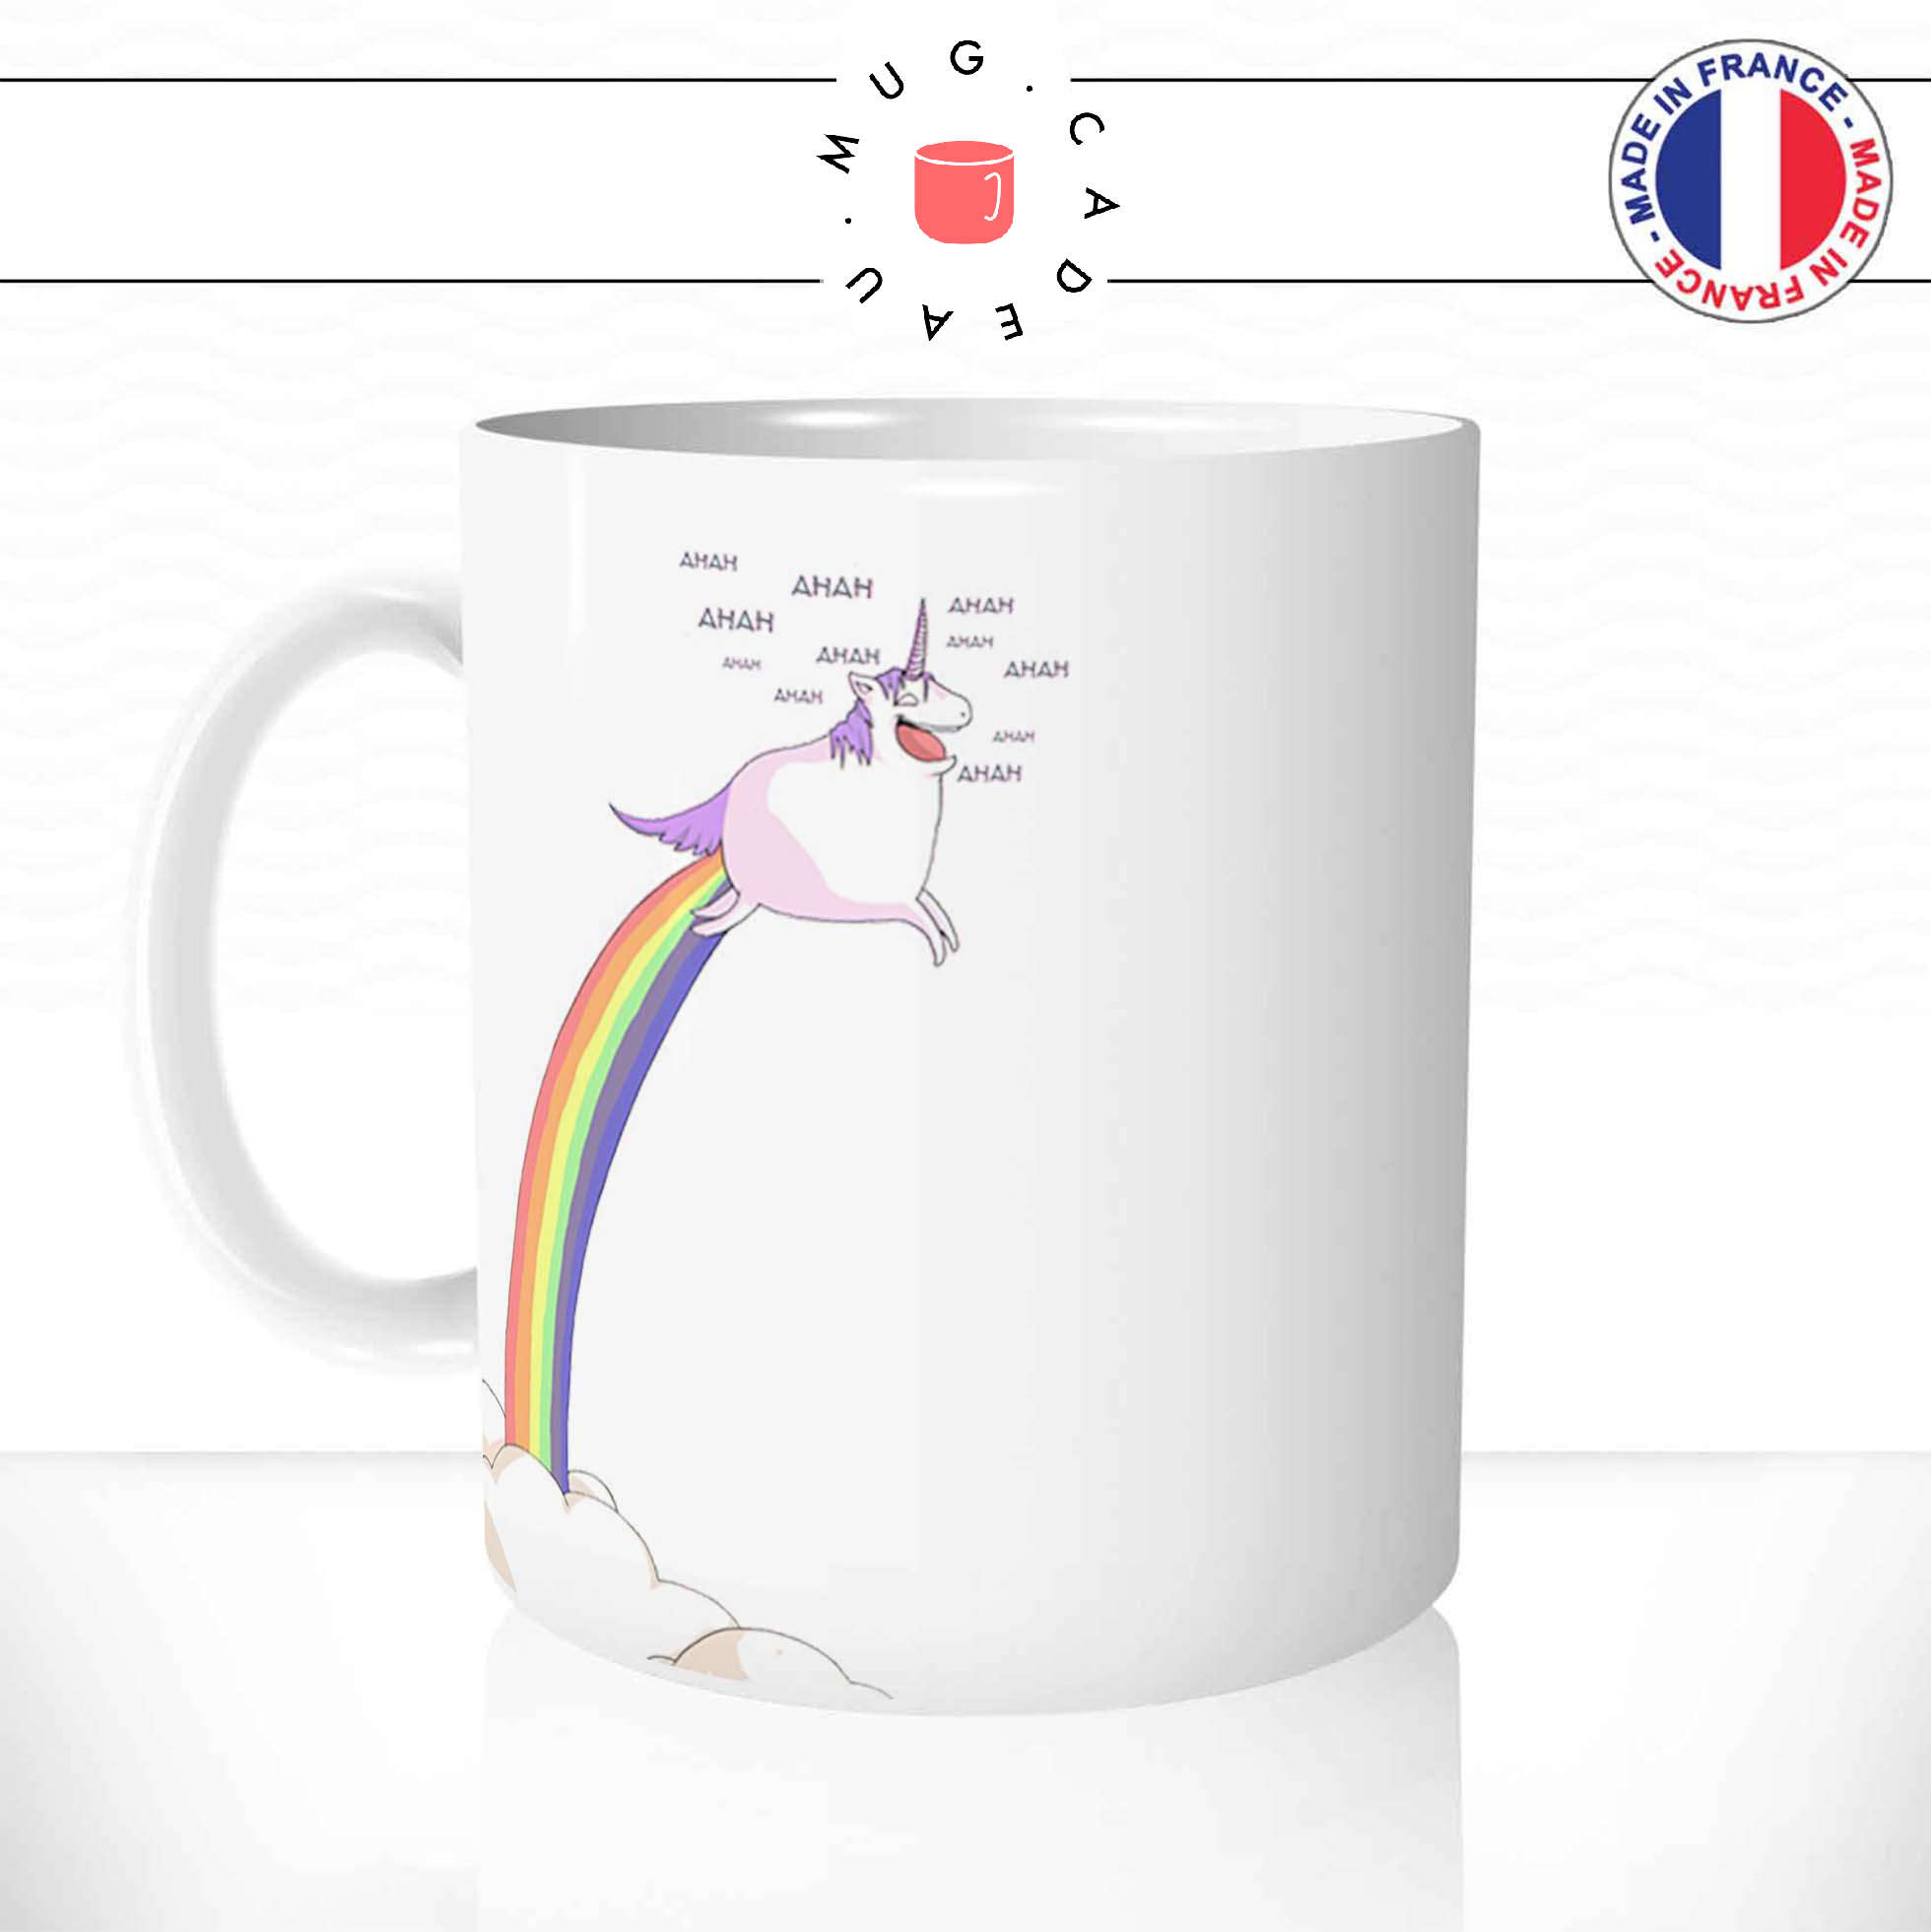 mug-tasse-ref6-licorne-grosse-haha-arc-en-ciel-cafe-the-mugs-tasses-personnalise-anse-gauche